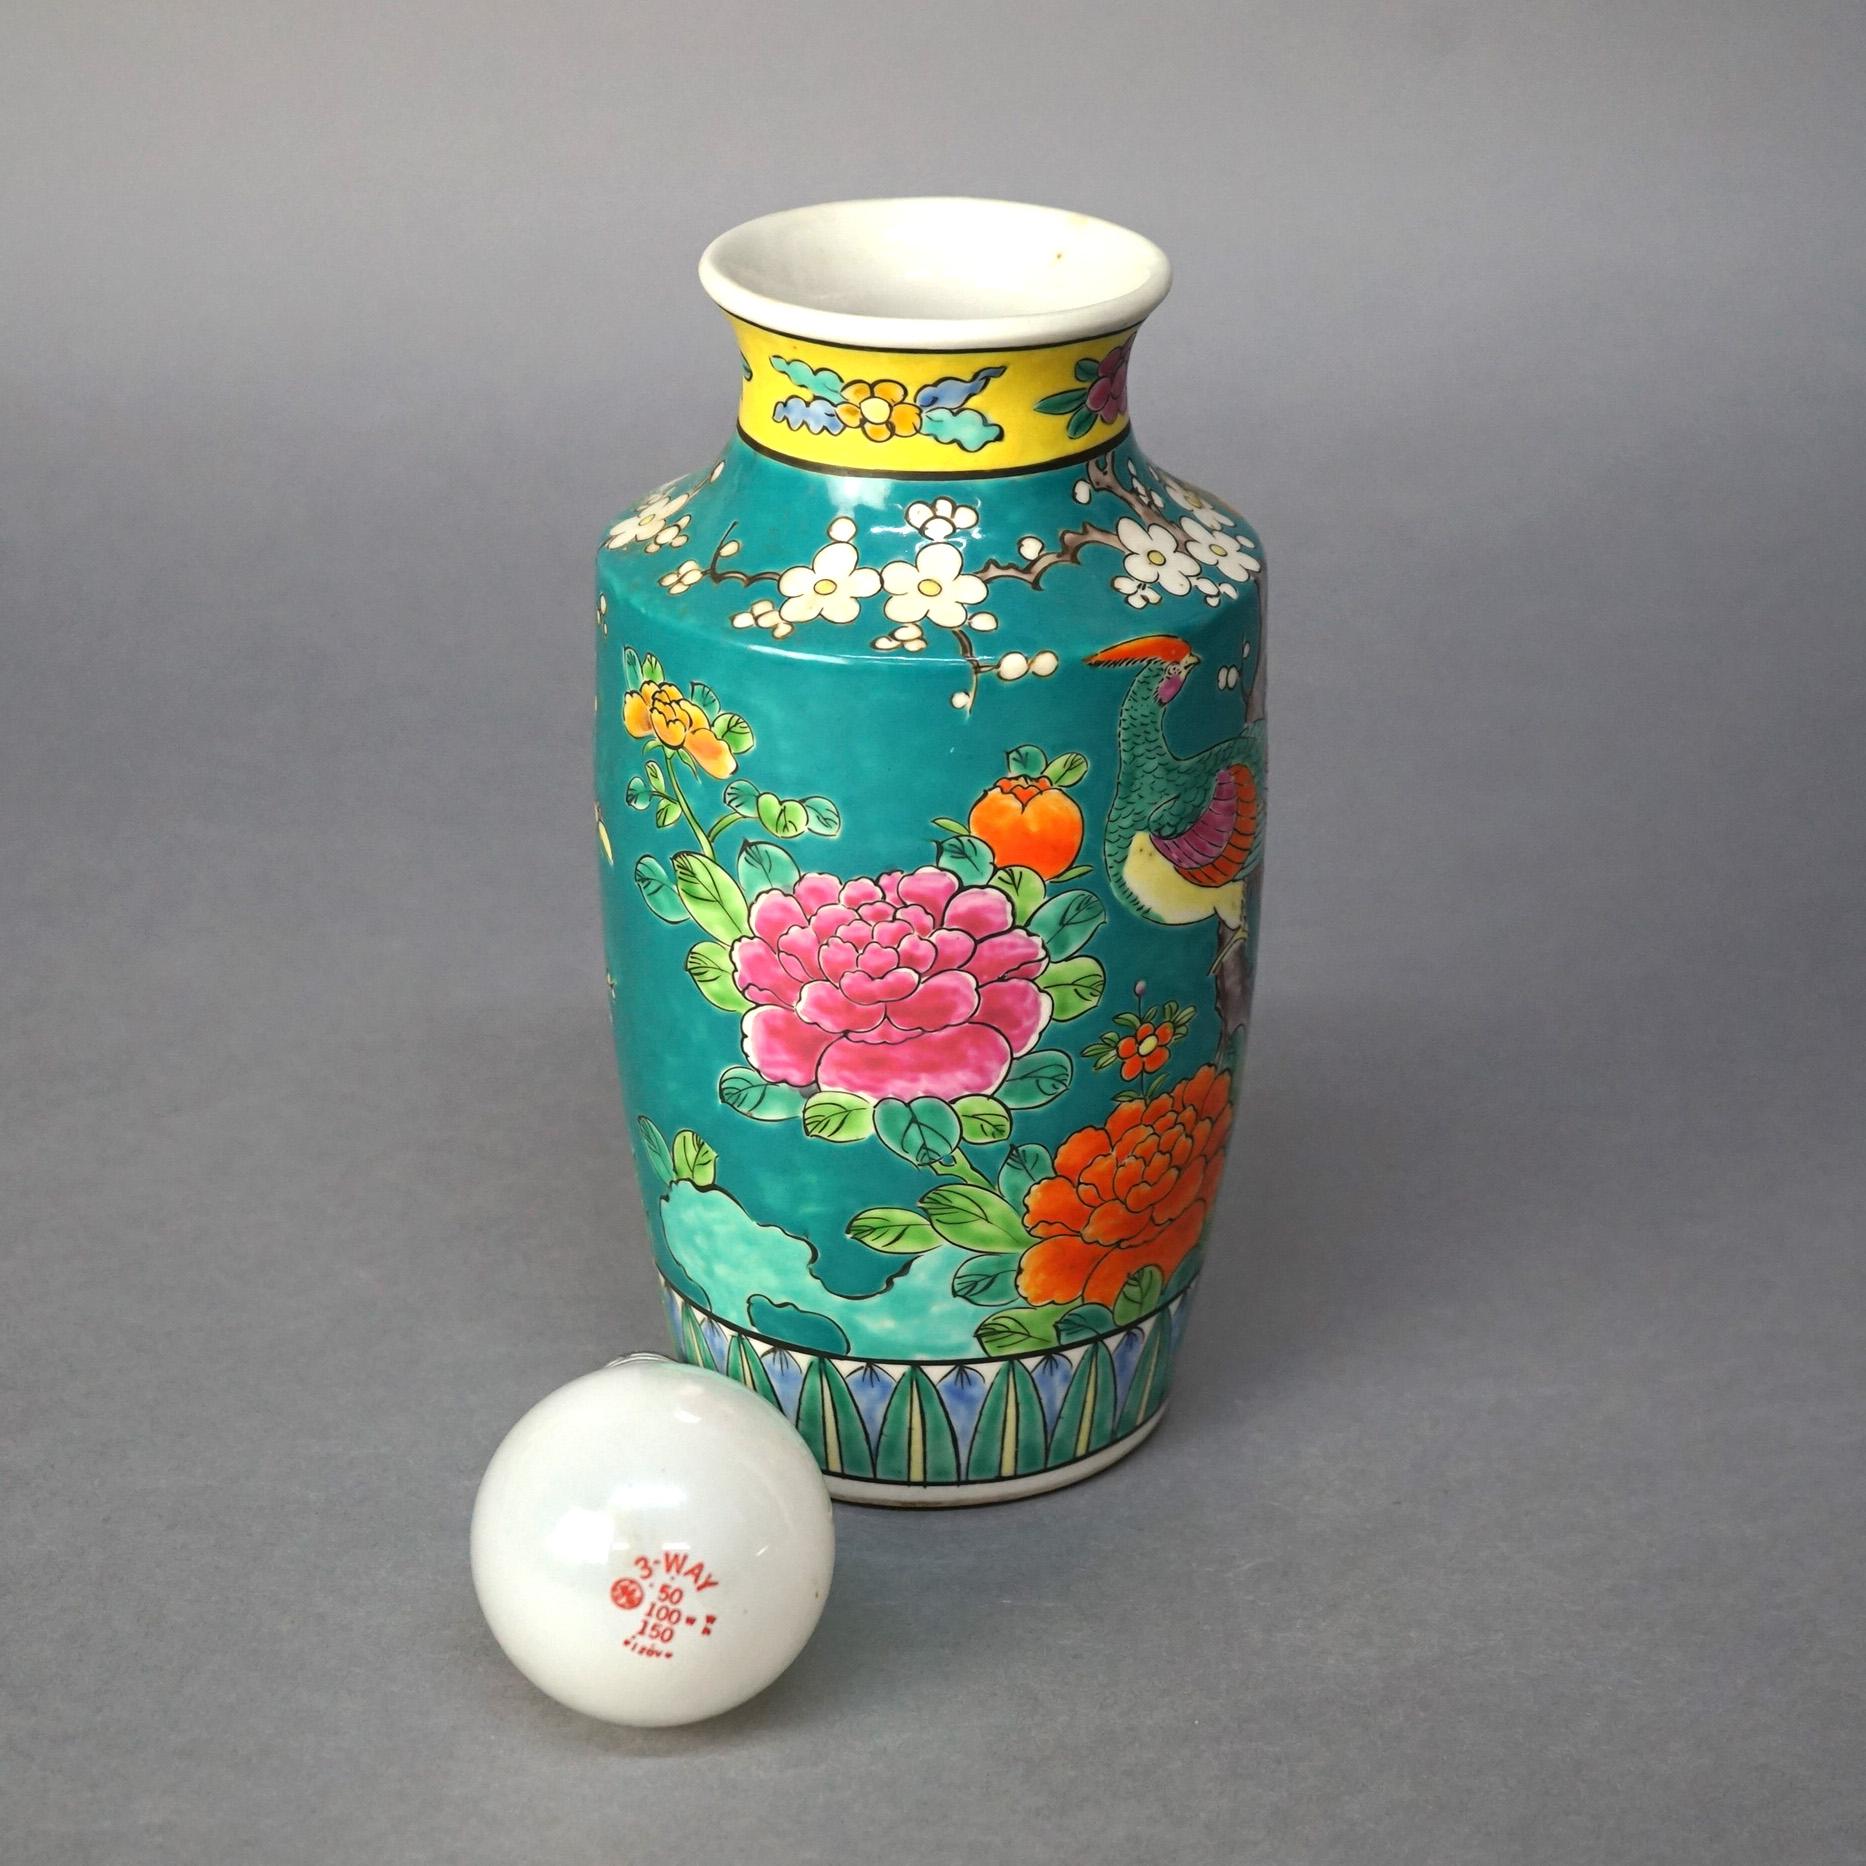 20th Century Antique Japanese Porcelain Enameled Garden Scene Vase with Birds & Flowers C1910